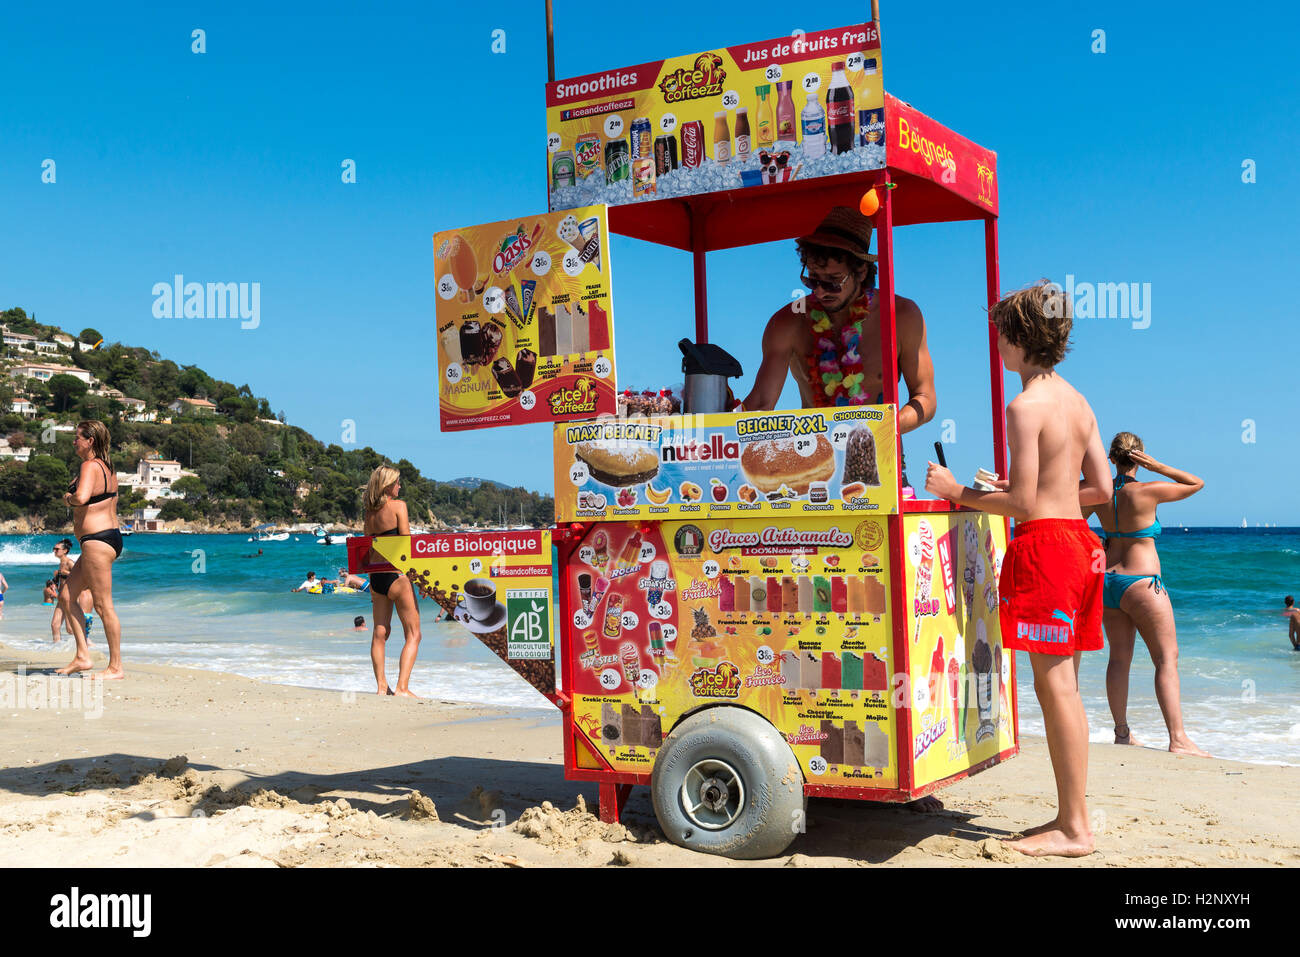 Iceman selling refreshments on the beach, Le Lavandou area, Provence-Alpes-Côte d'Azur region, France Stock Photo